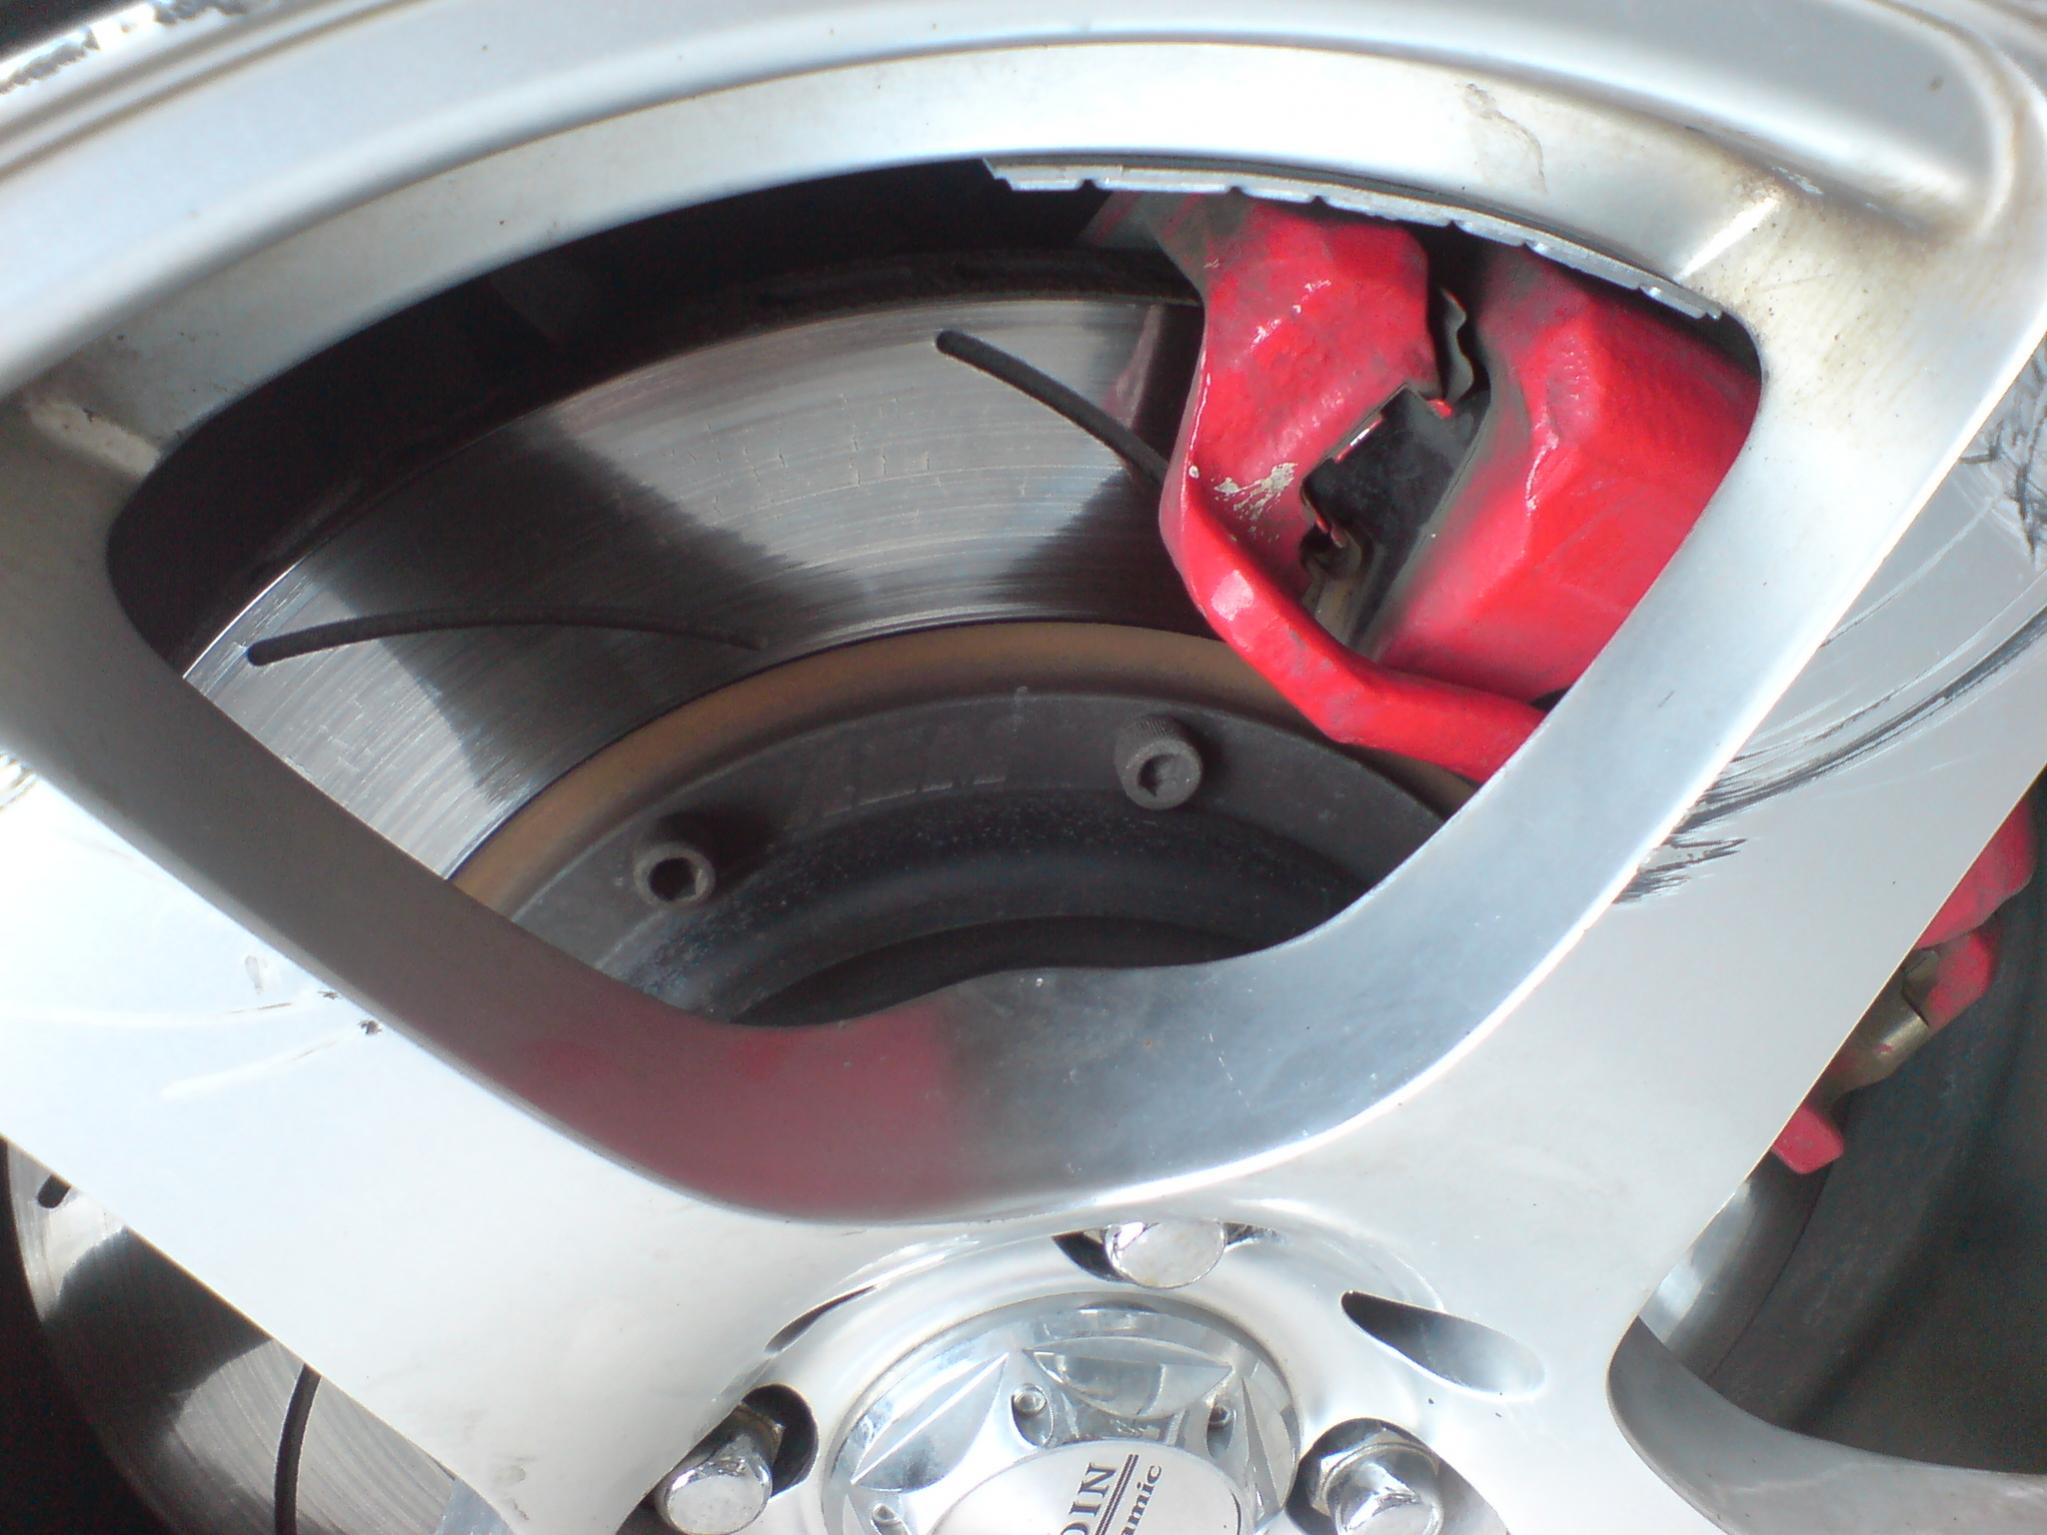 10095d1281366155-replacing-aem-big-brake-kit-rotors-brembo-rotors-need-help-dsc00836.jpg